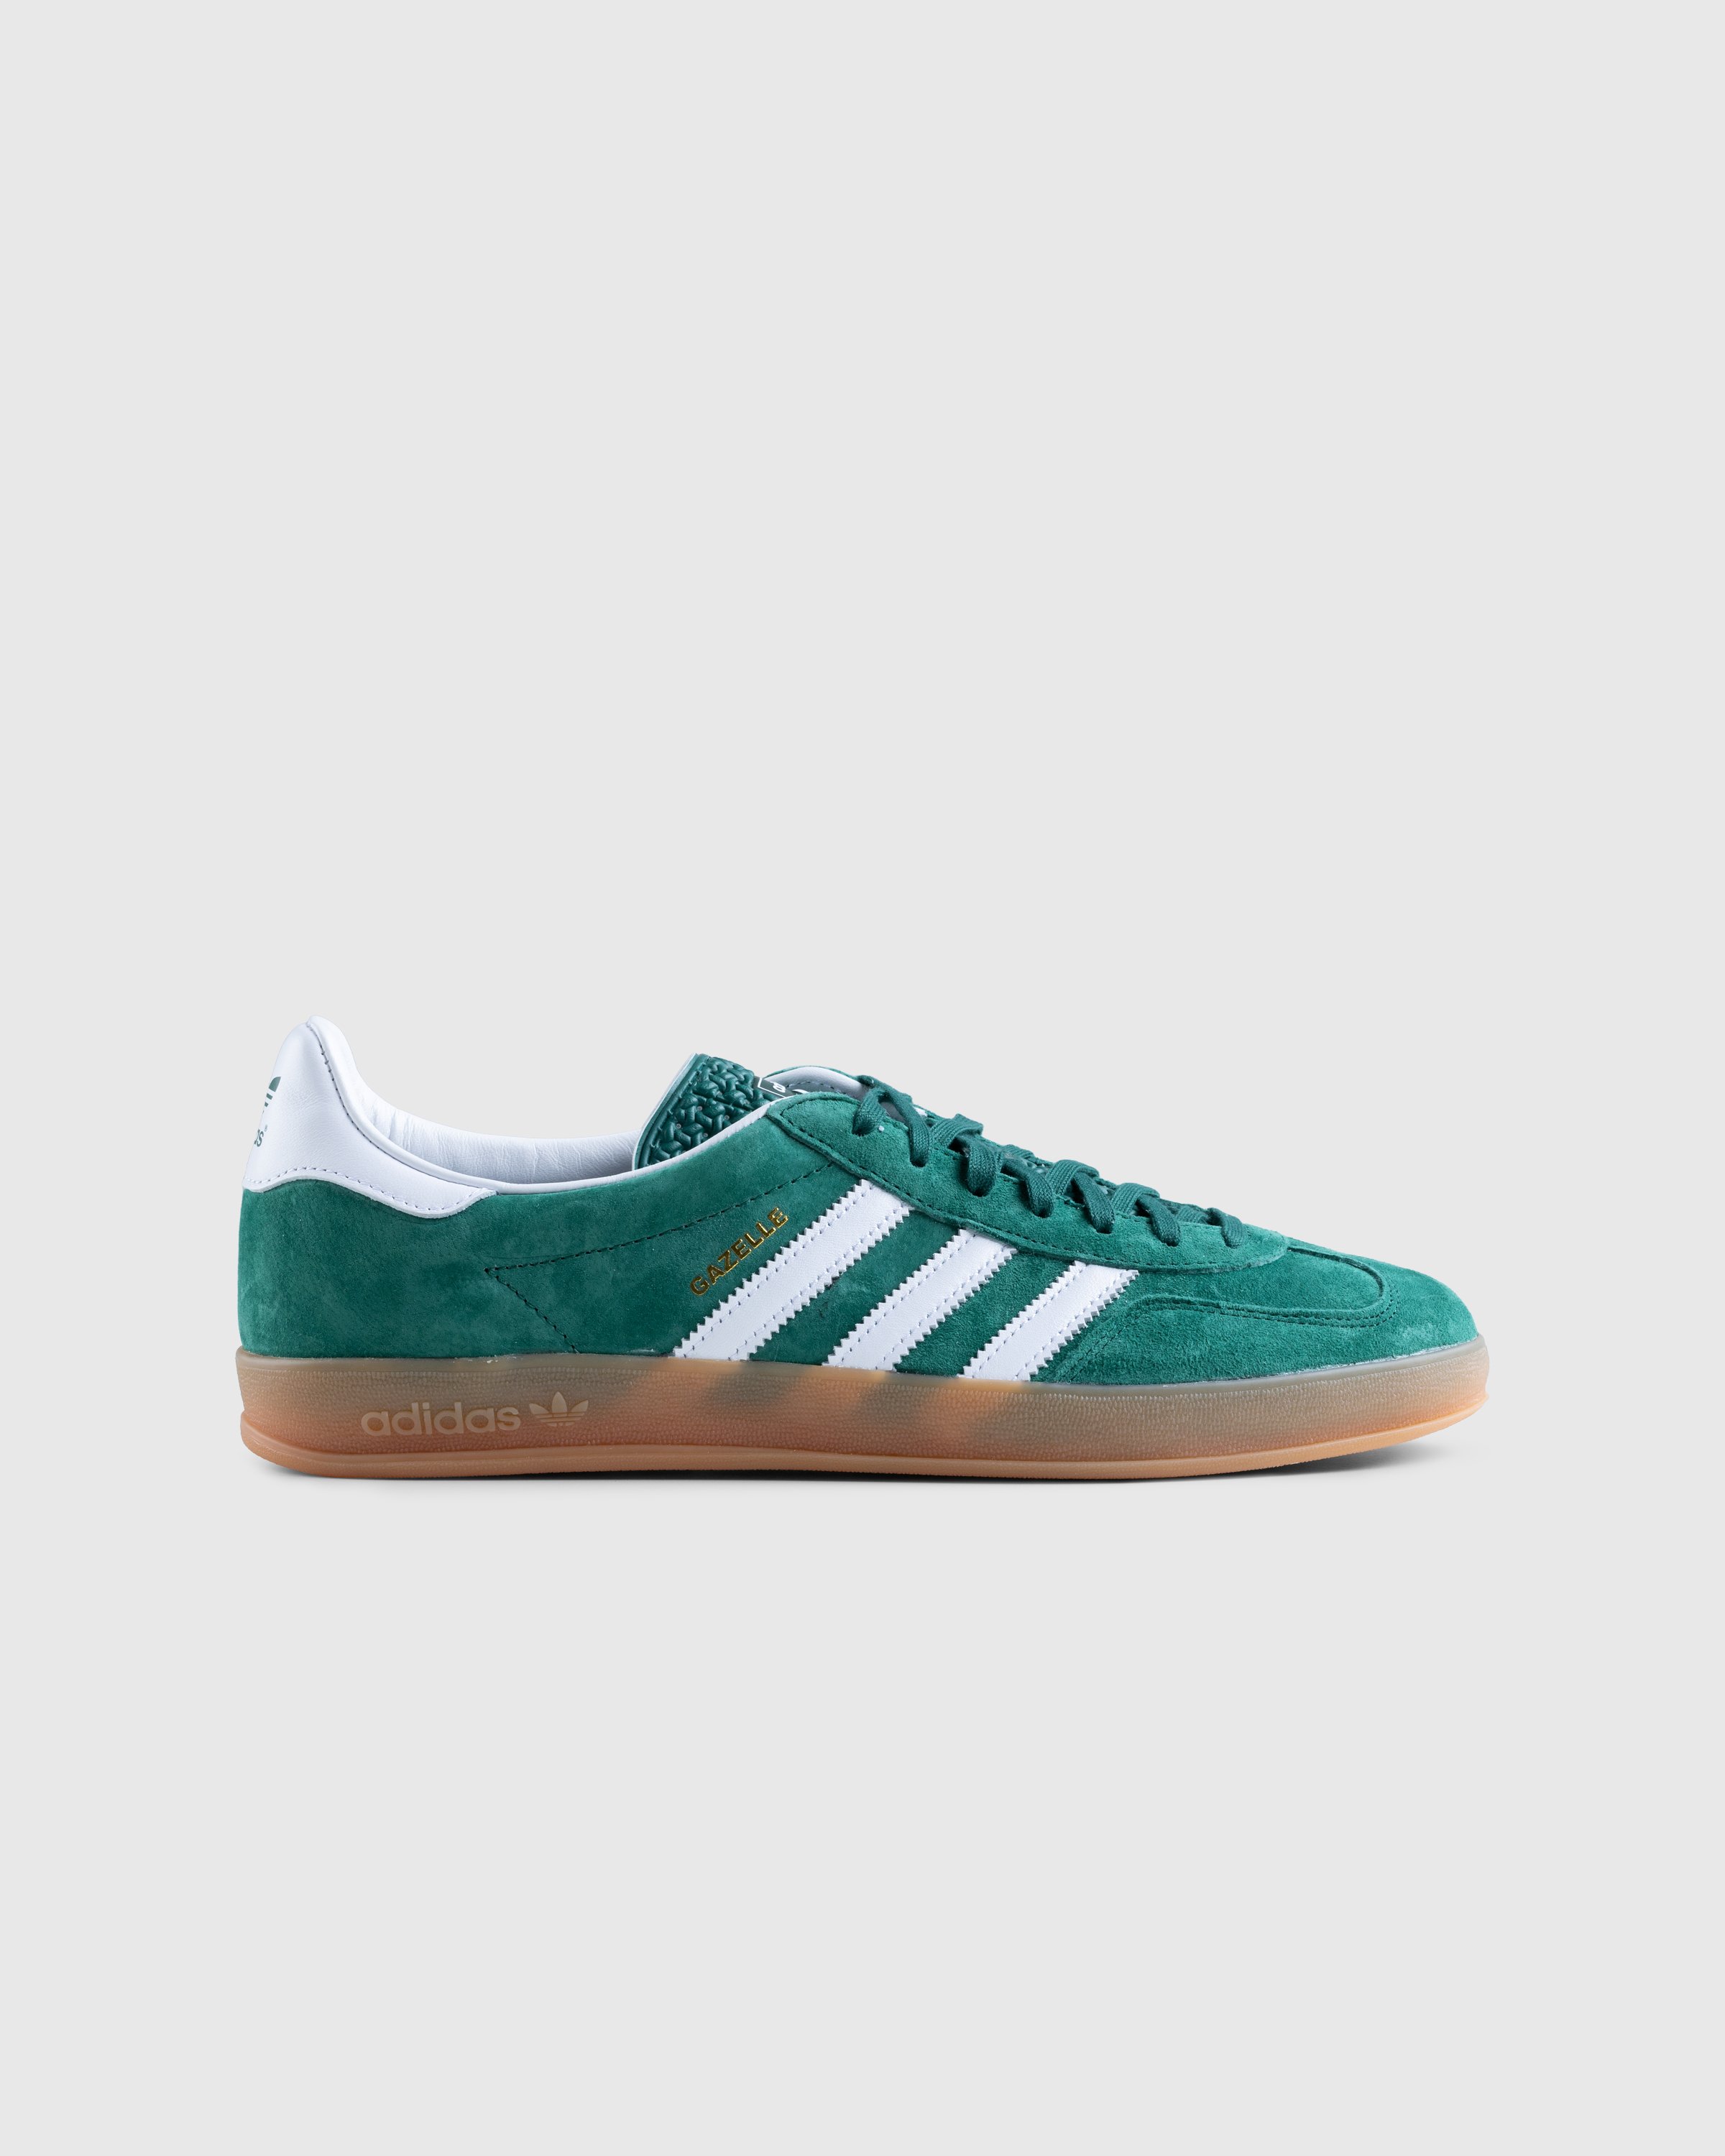 Adidas - Gazelle Indoor Collegiate Green - Footwear - Green - Image 1